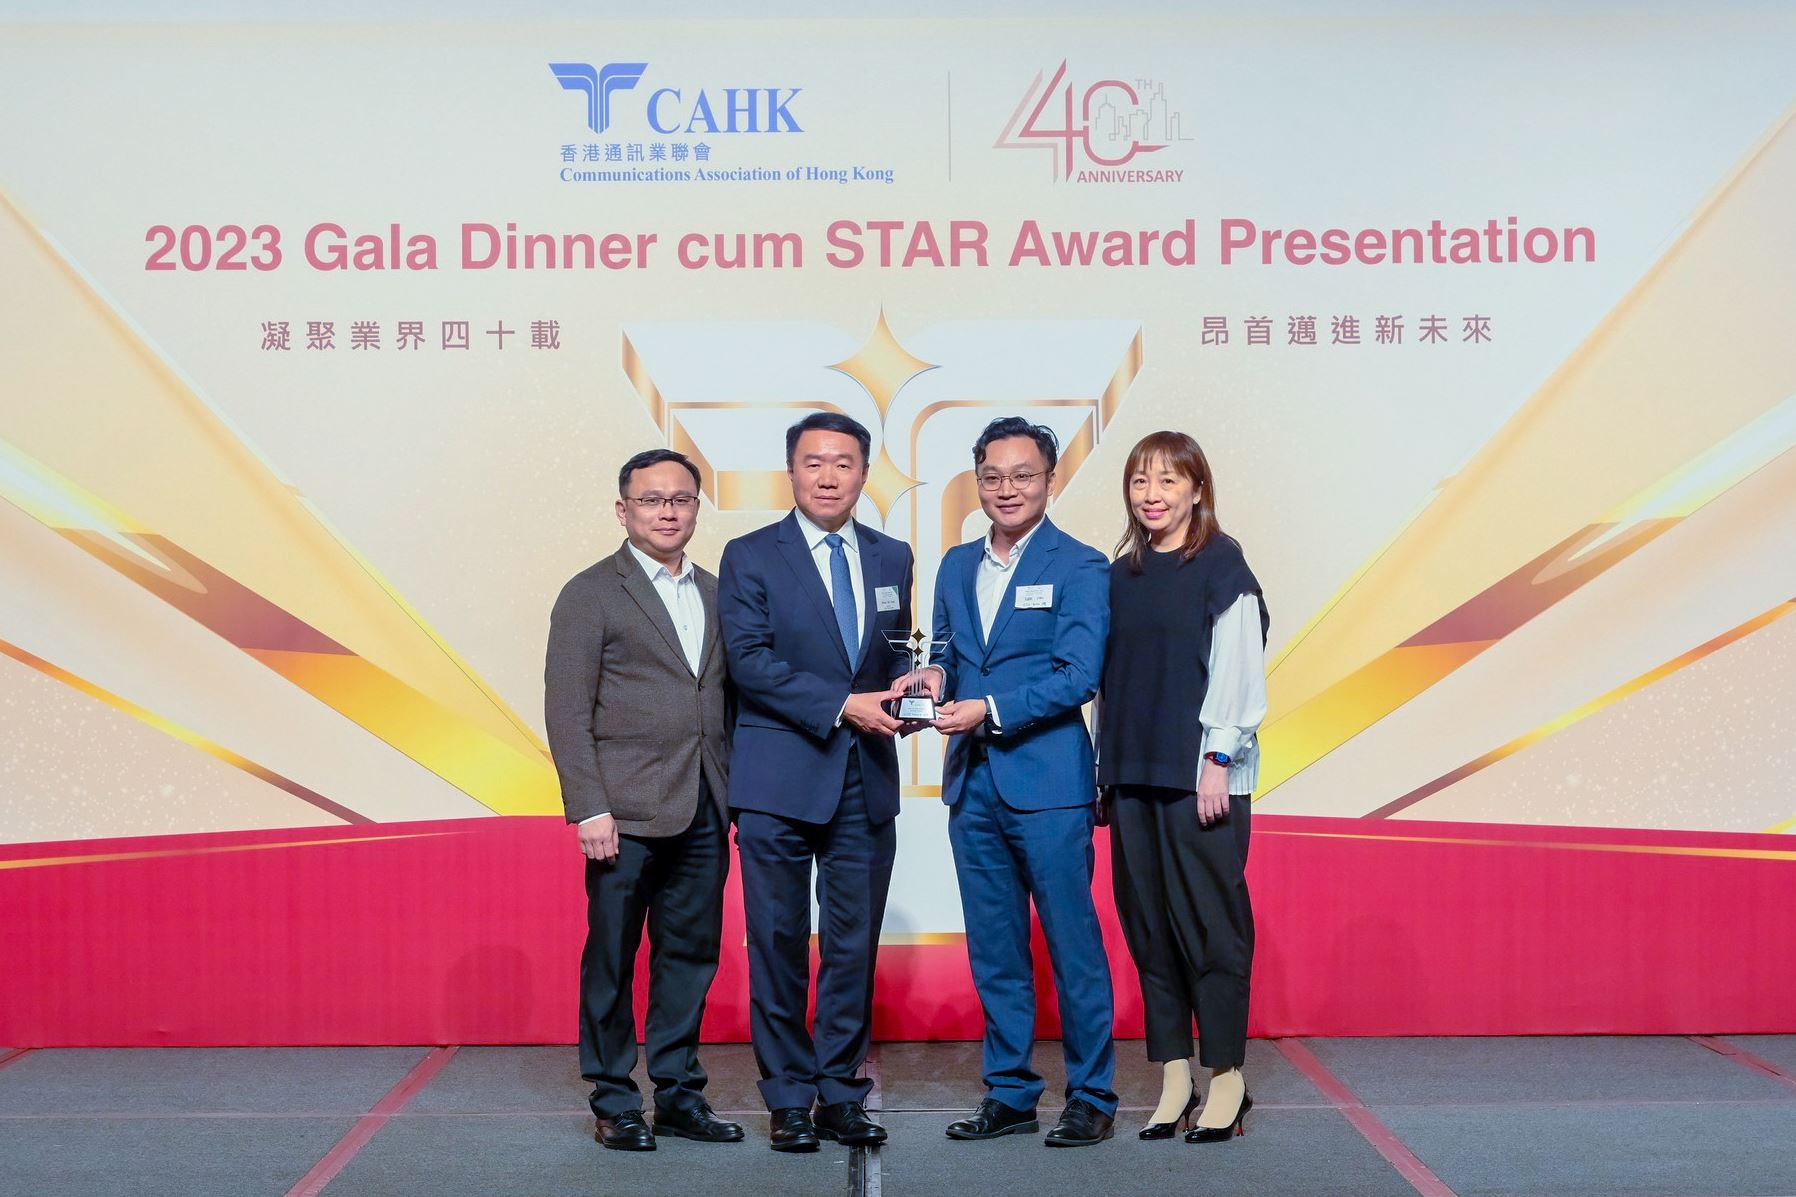 CAHK STAR Award 2023